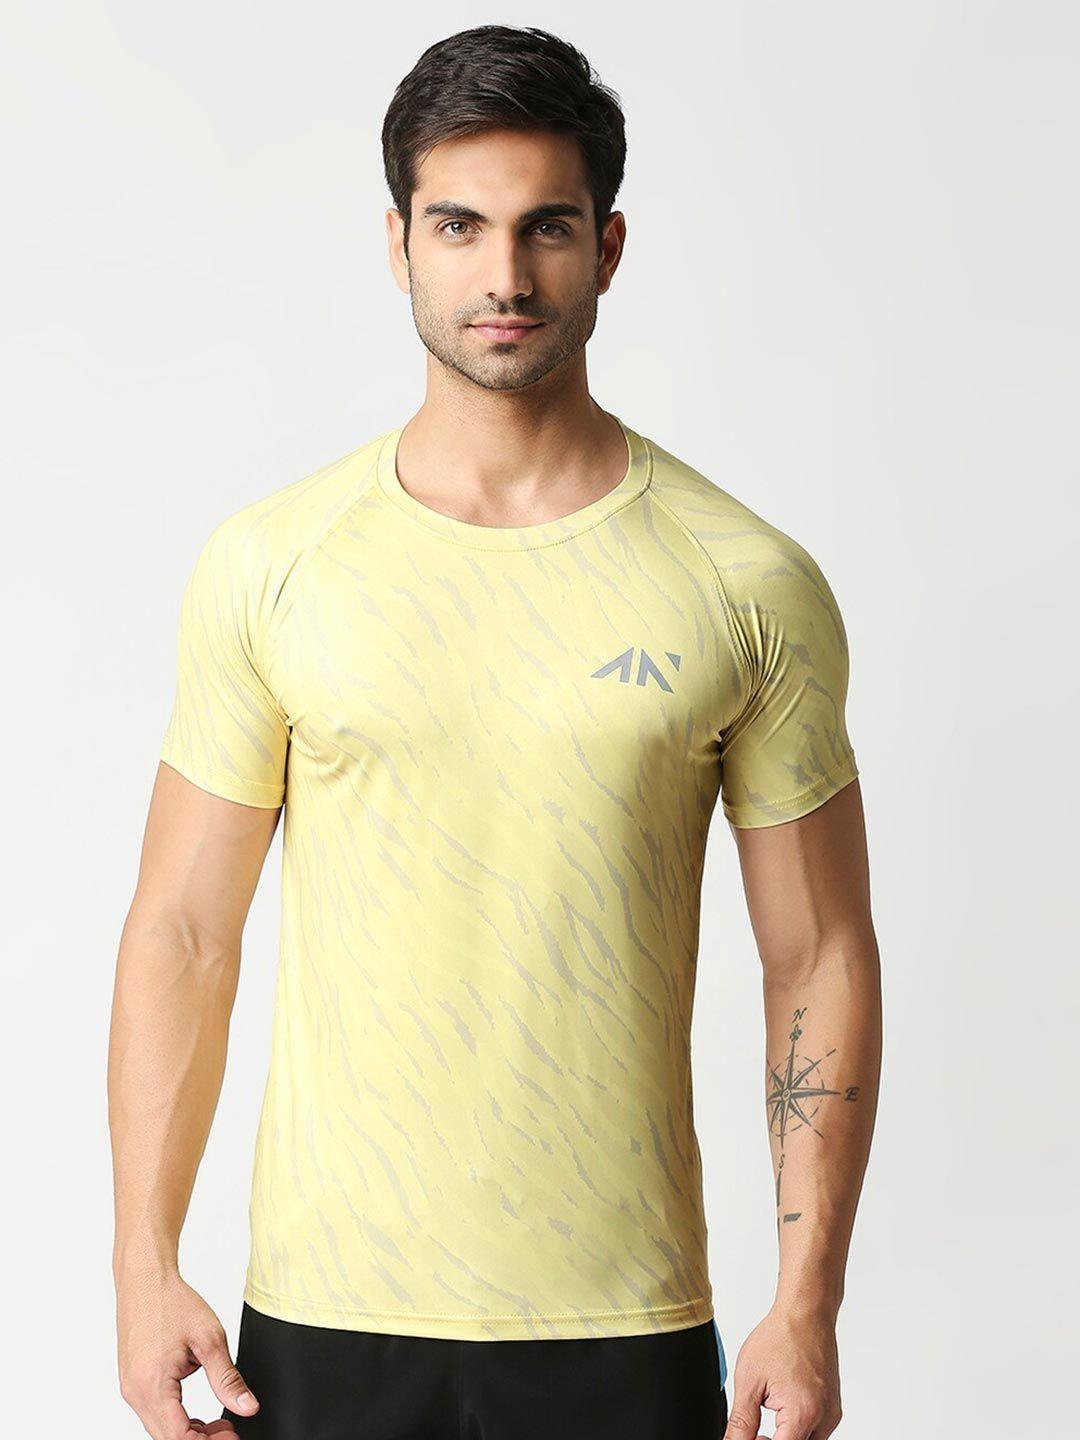 aesthetic nation men animal printed yellow everfresh t-shirt